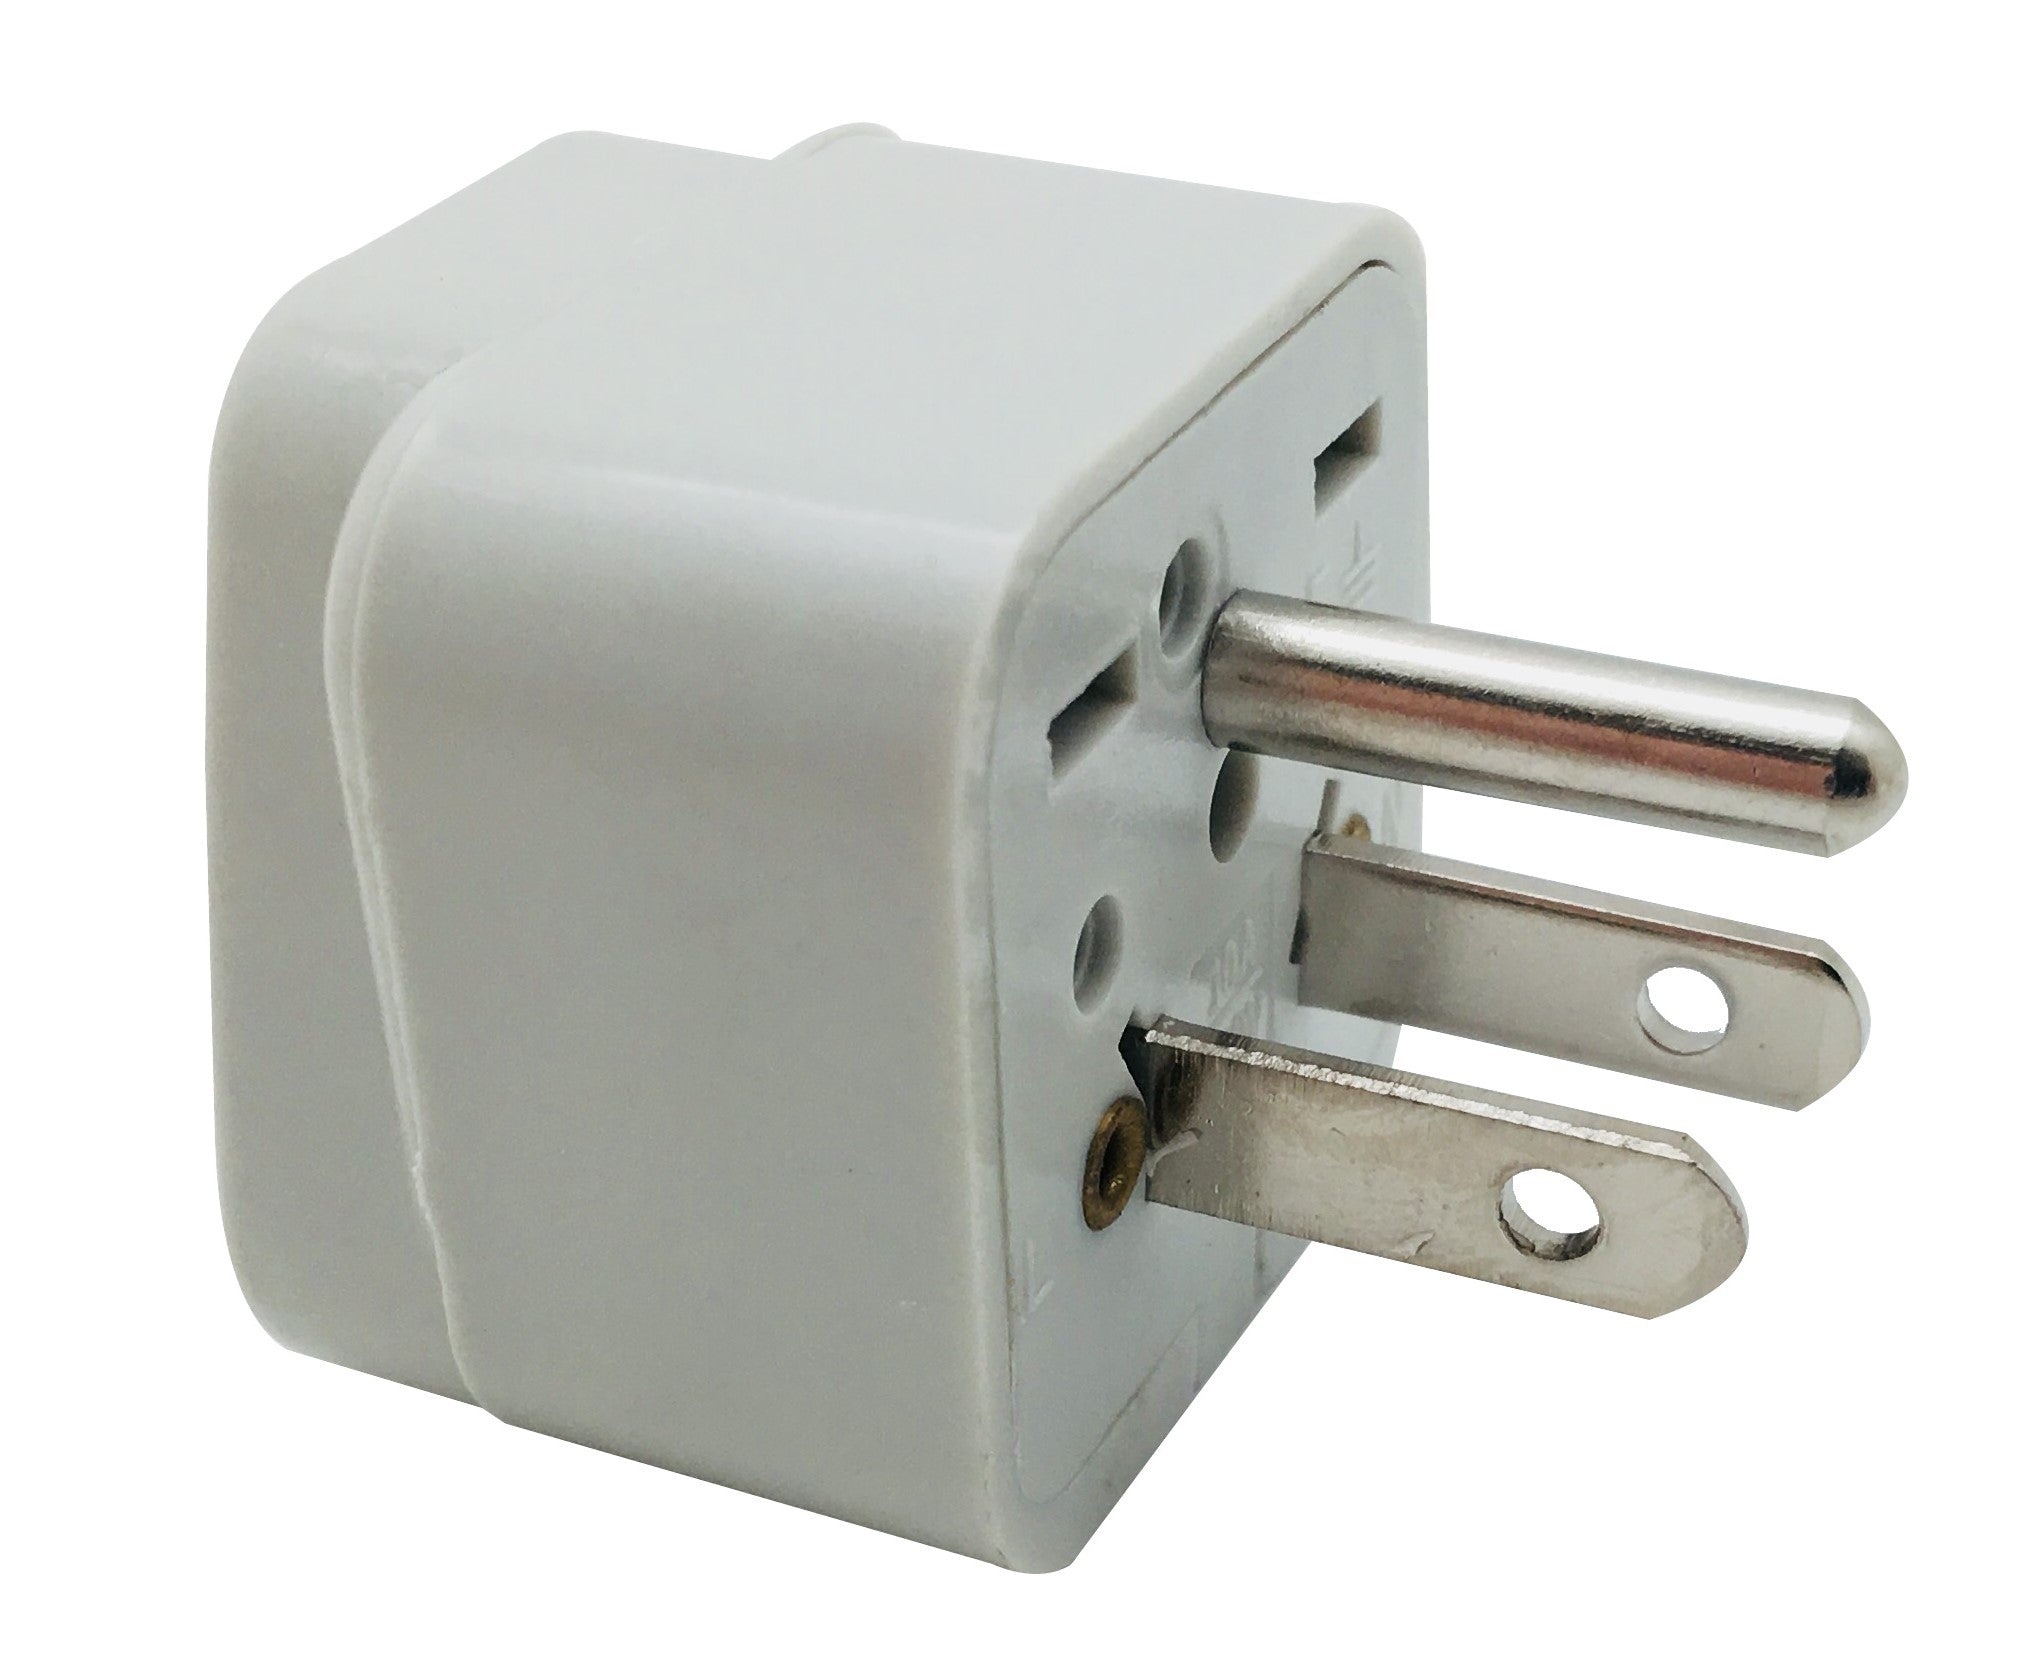 42-0306 Universal Power Plug Adapter: Flat blade attachment plug